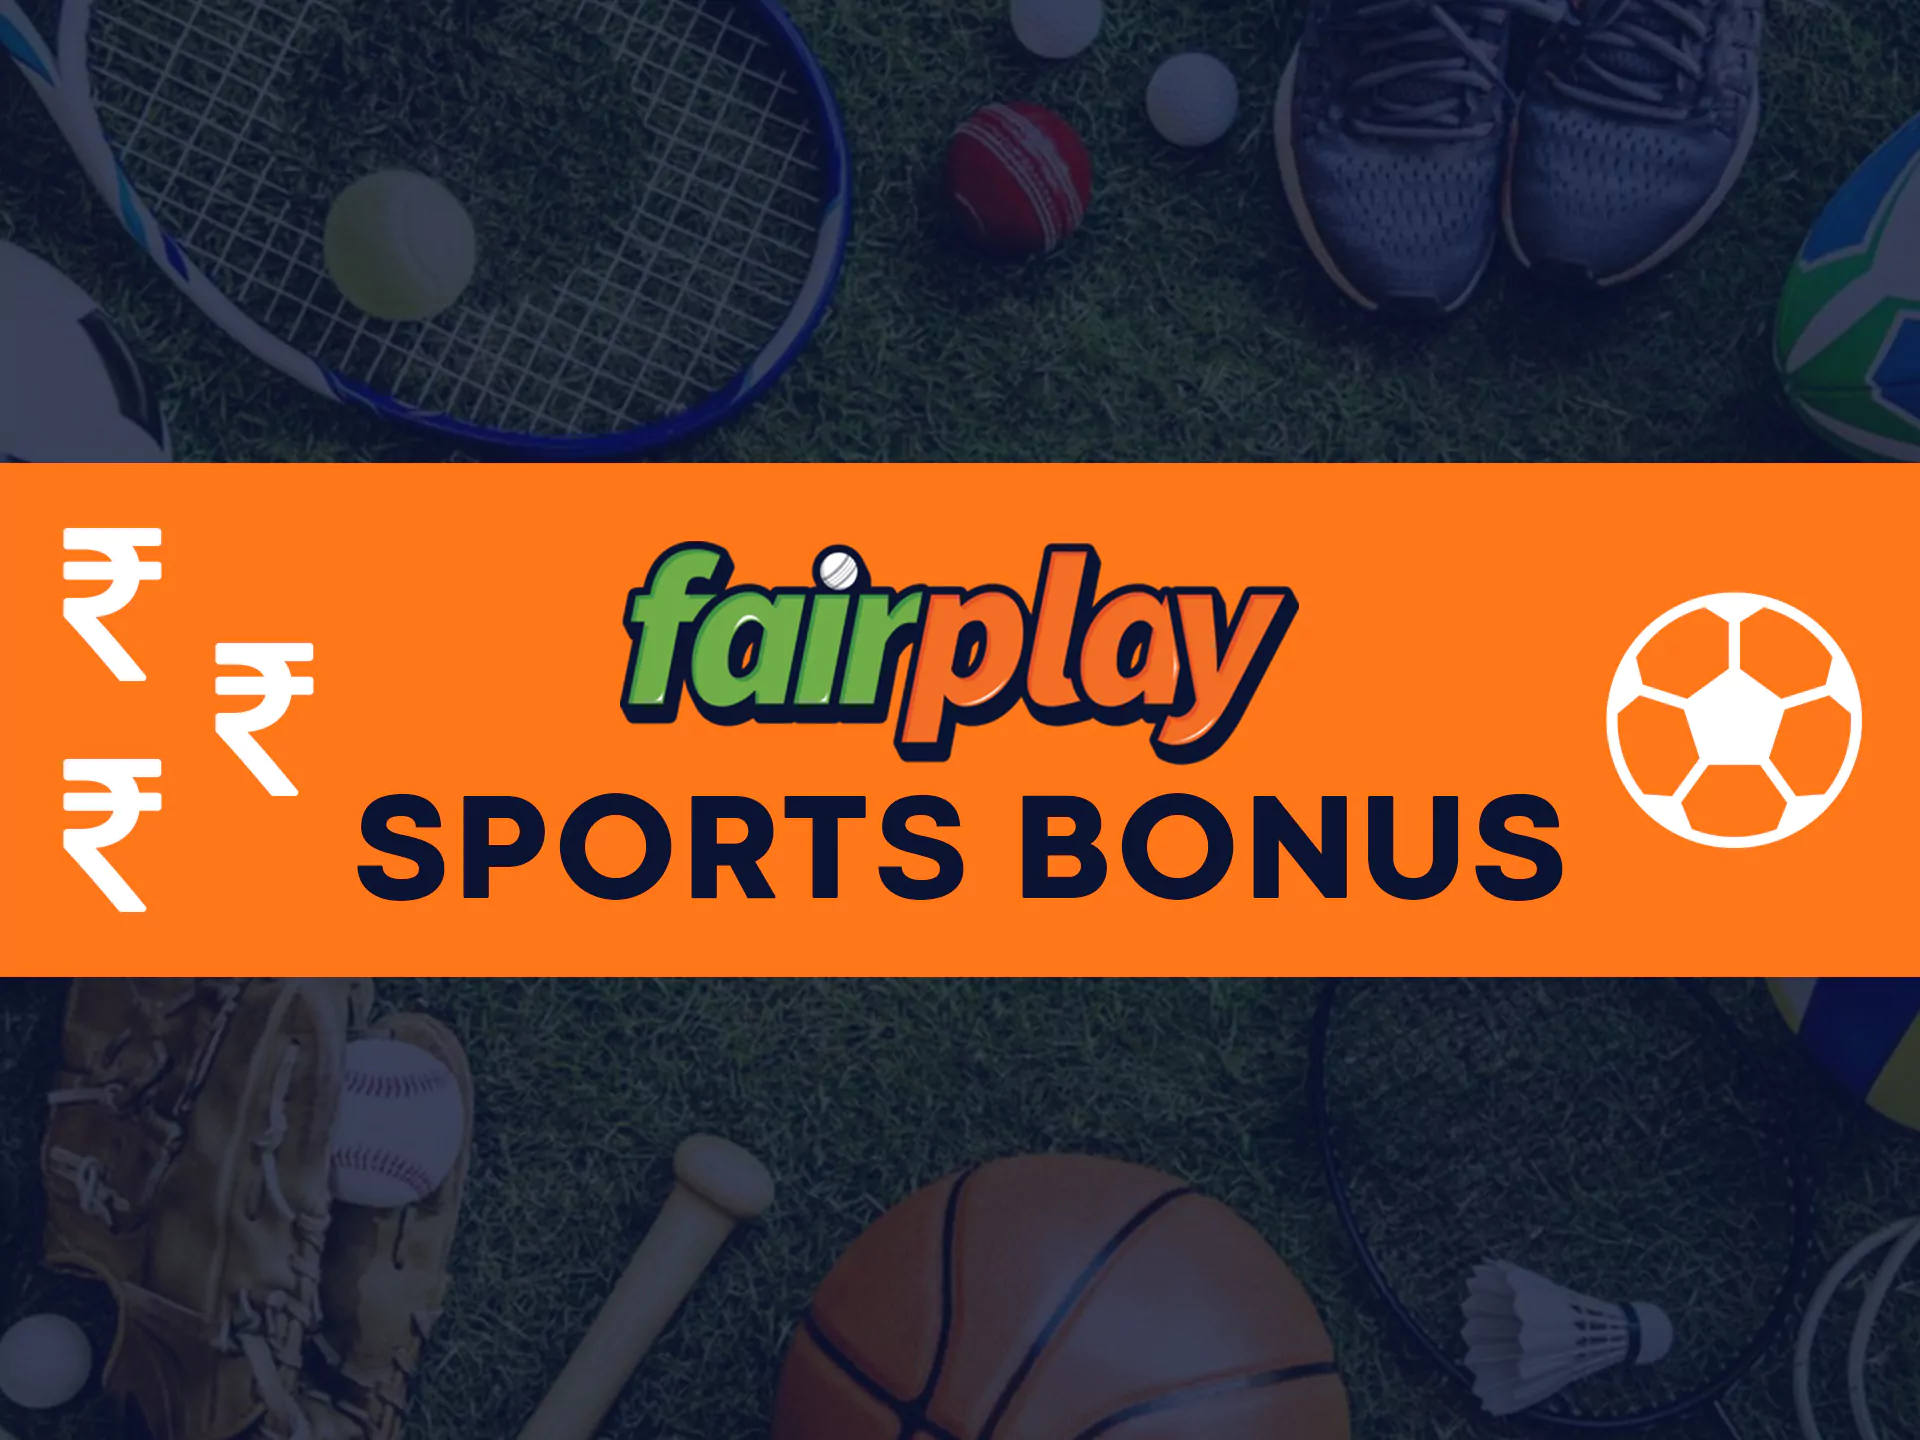 Get bonus at Farplay for betting on sports.